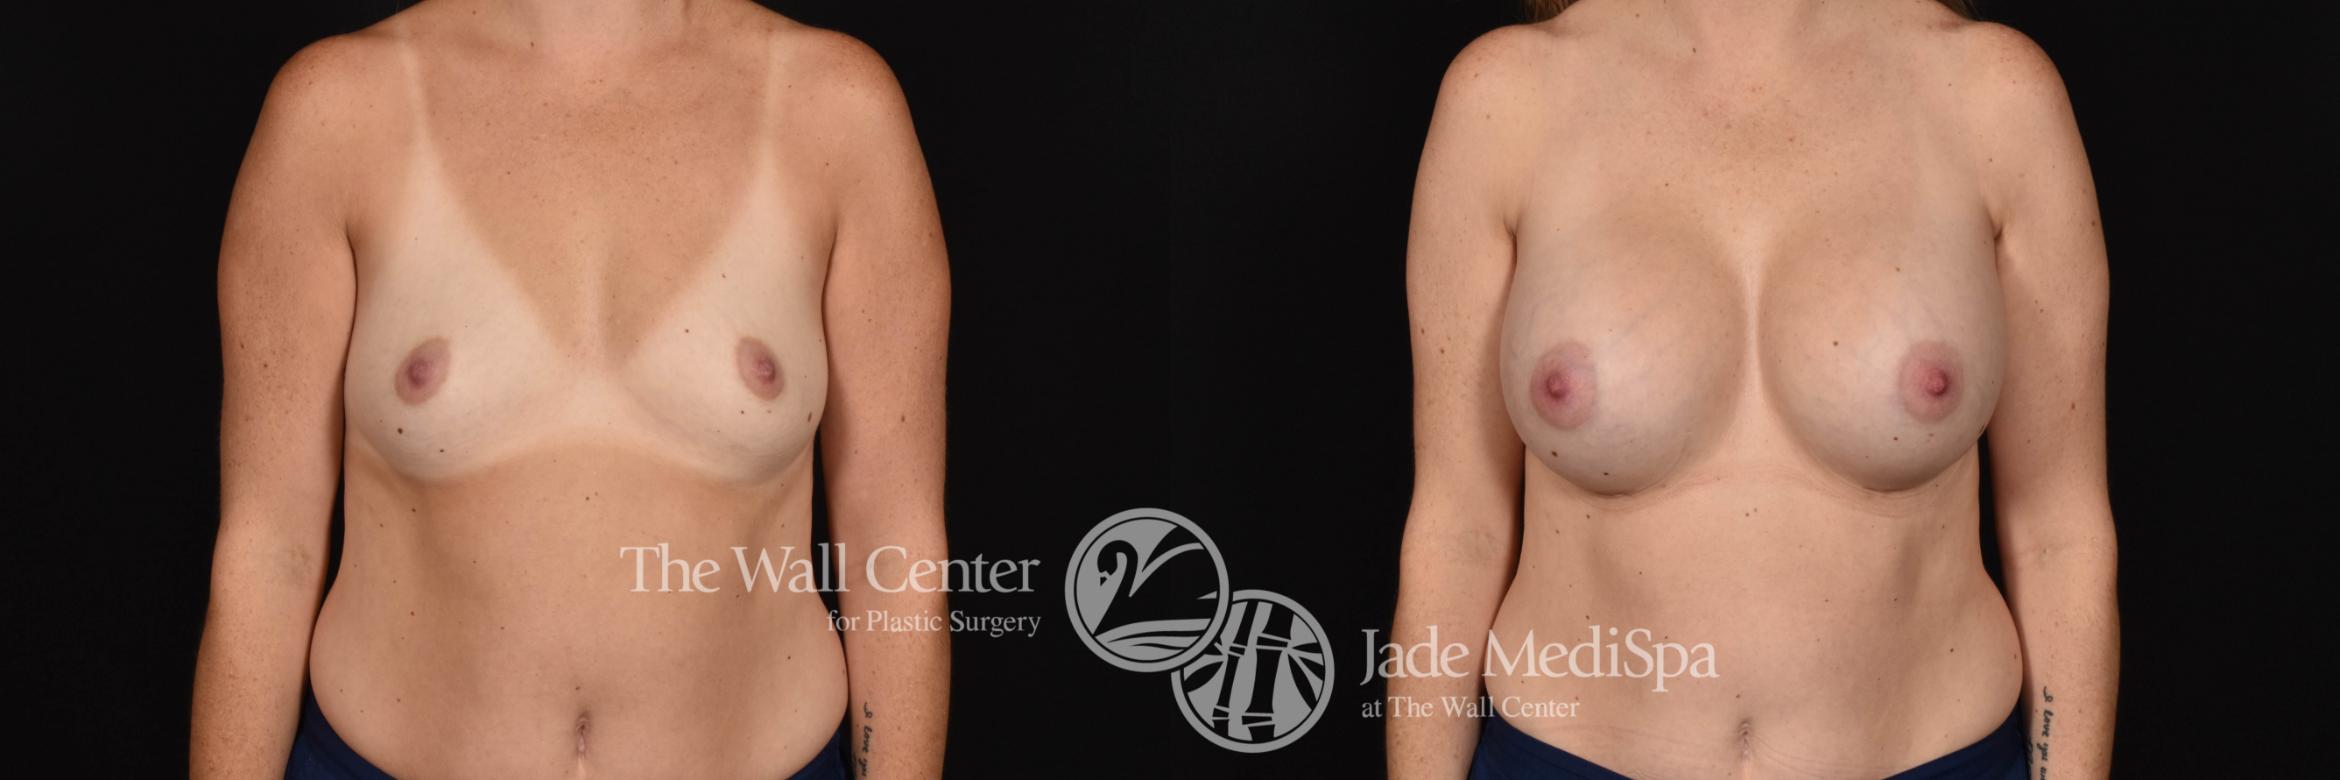 Breast Augmentation Front Photo, Shreveport, Louisiana, The Wall Center for Plastic Surgery, Case 815